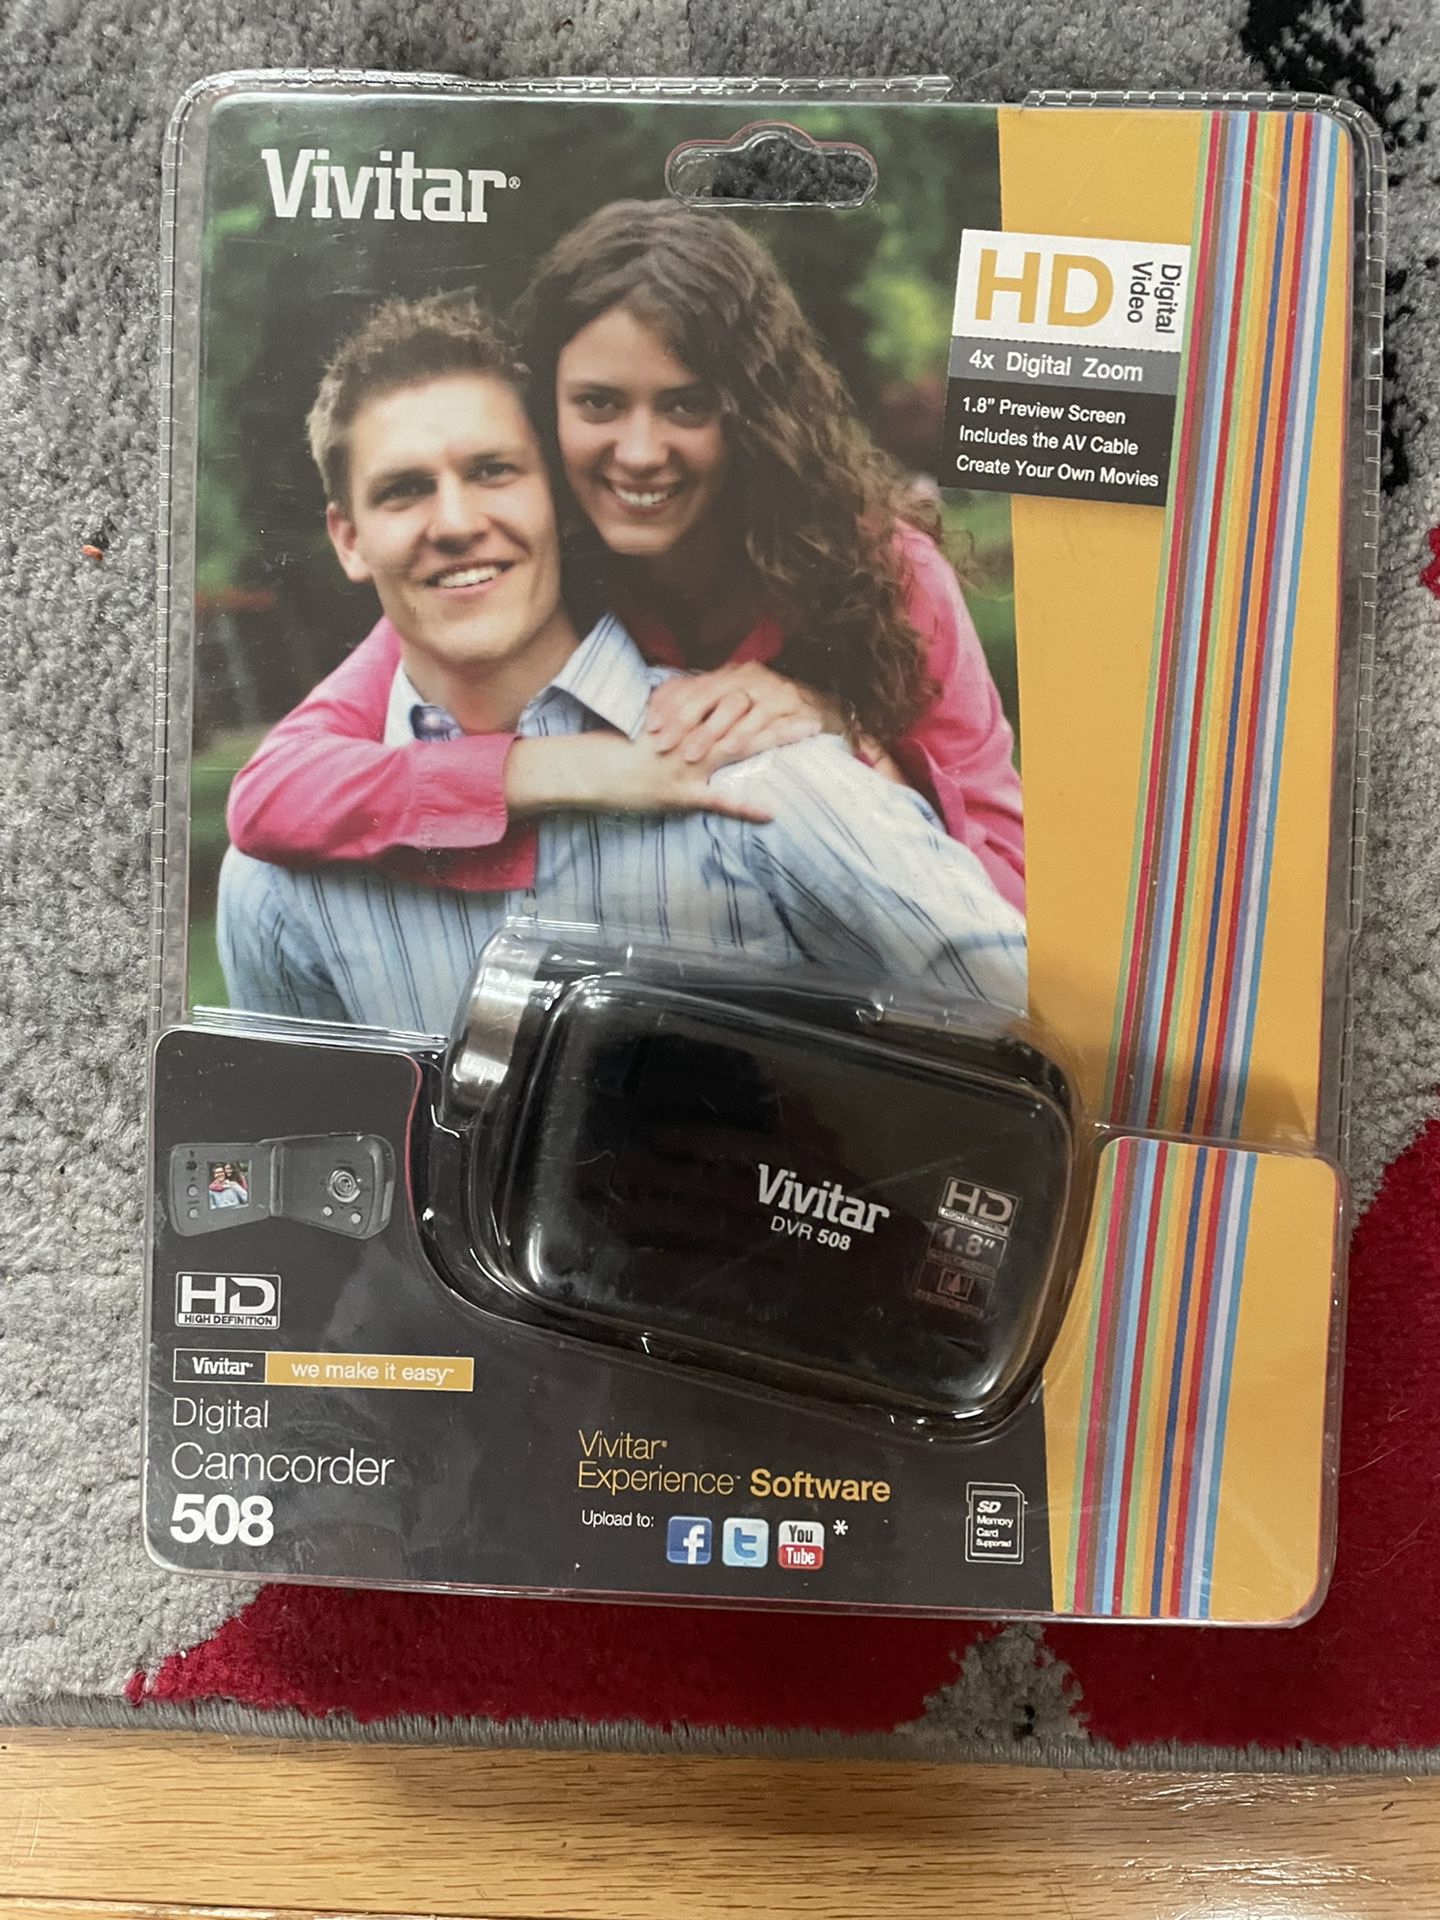 New Vivitar HD Digital Camcorder 508